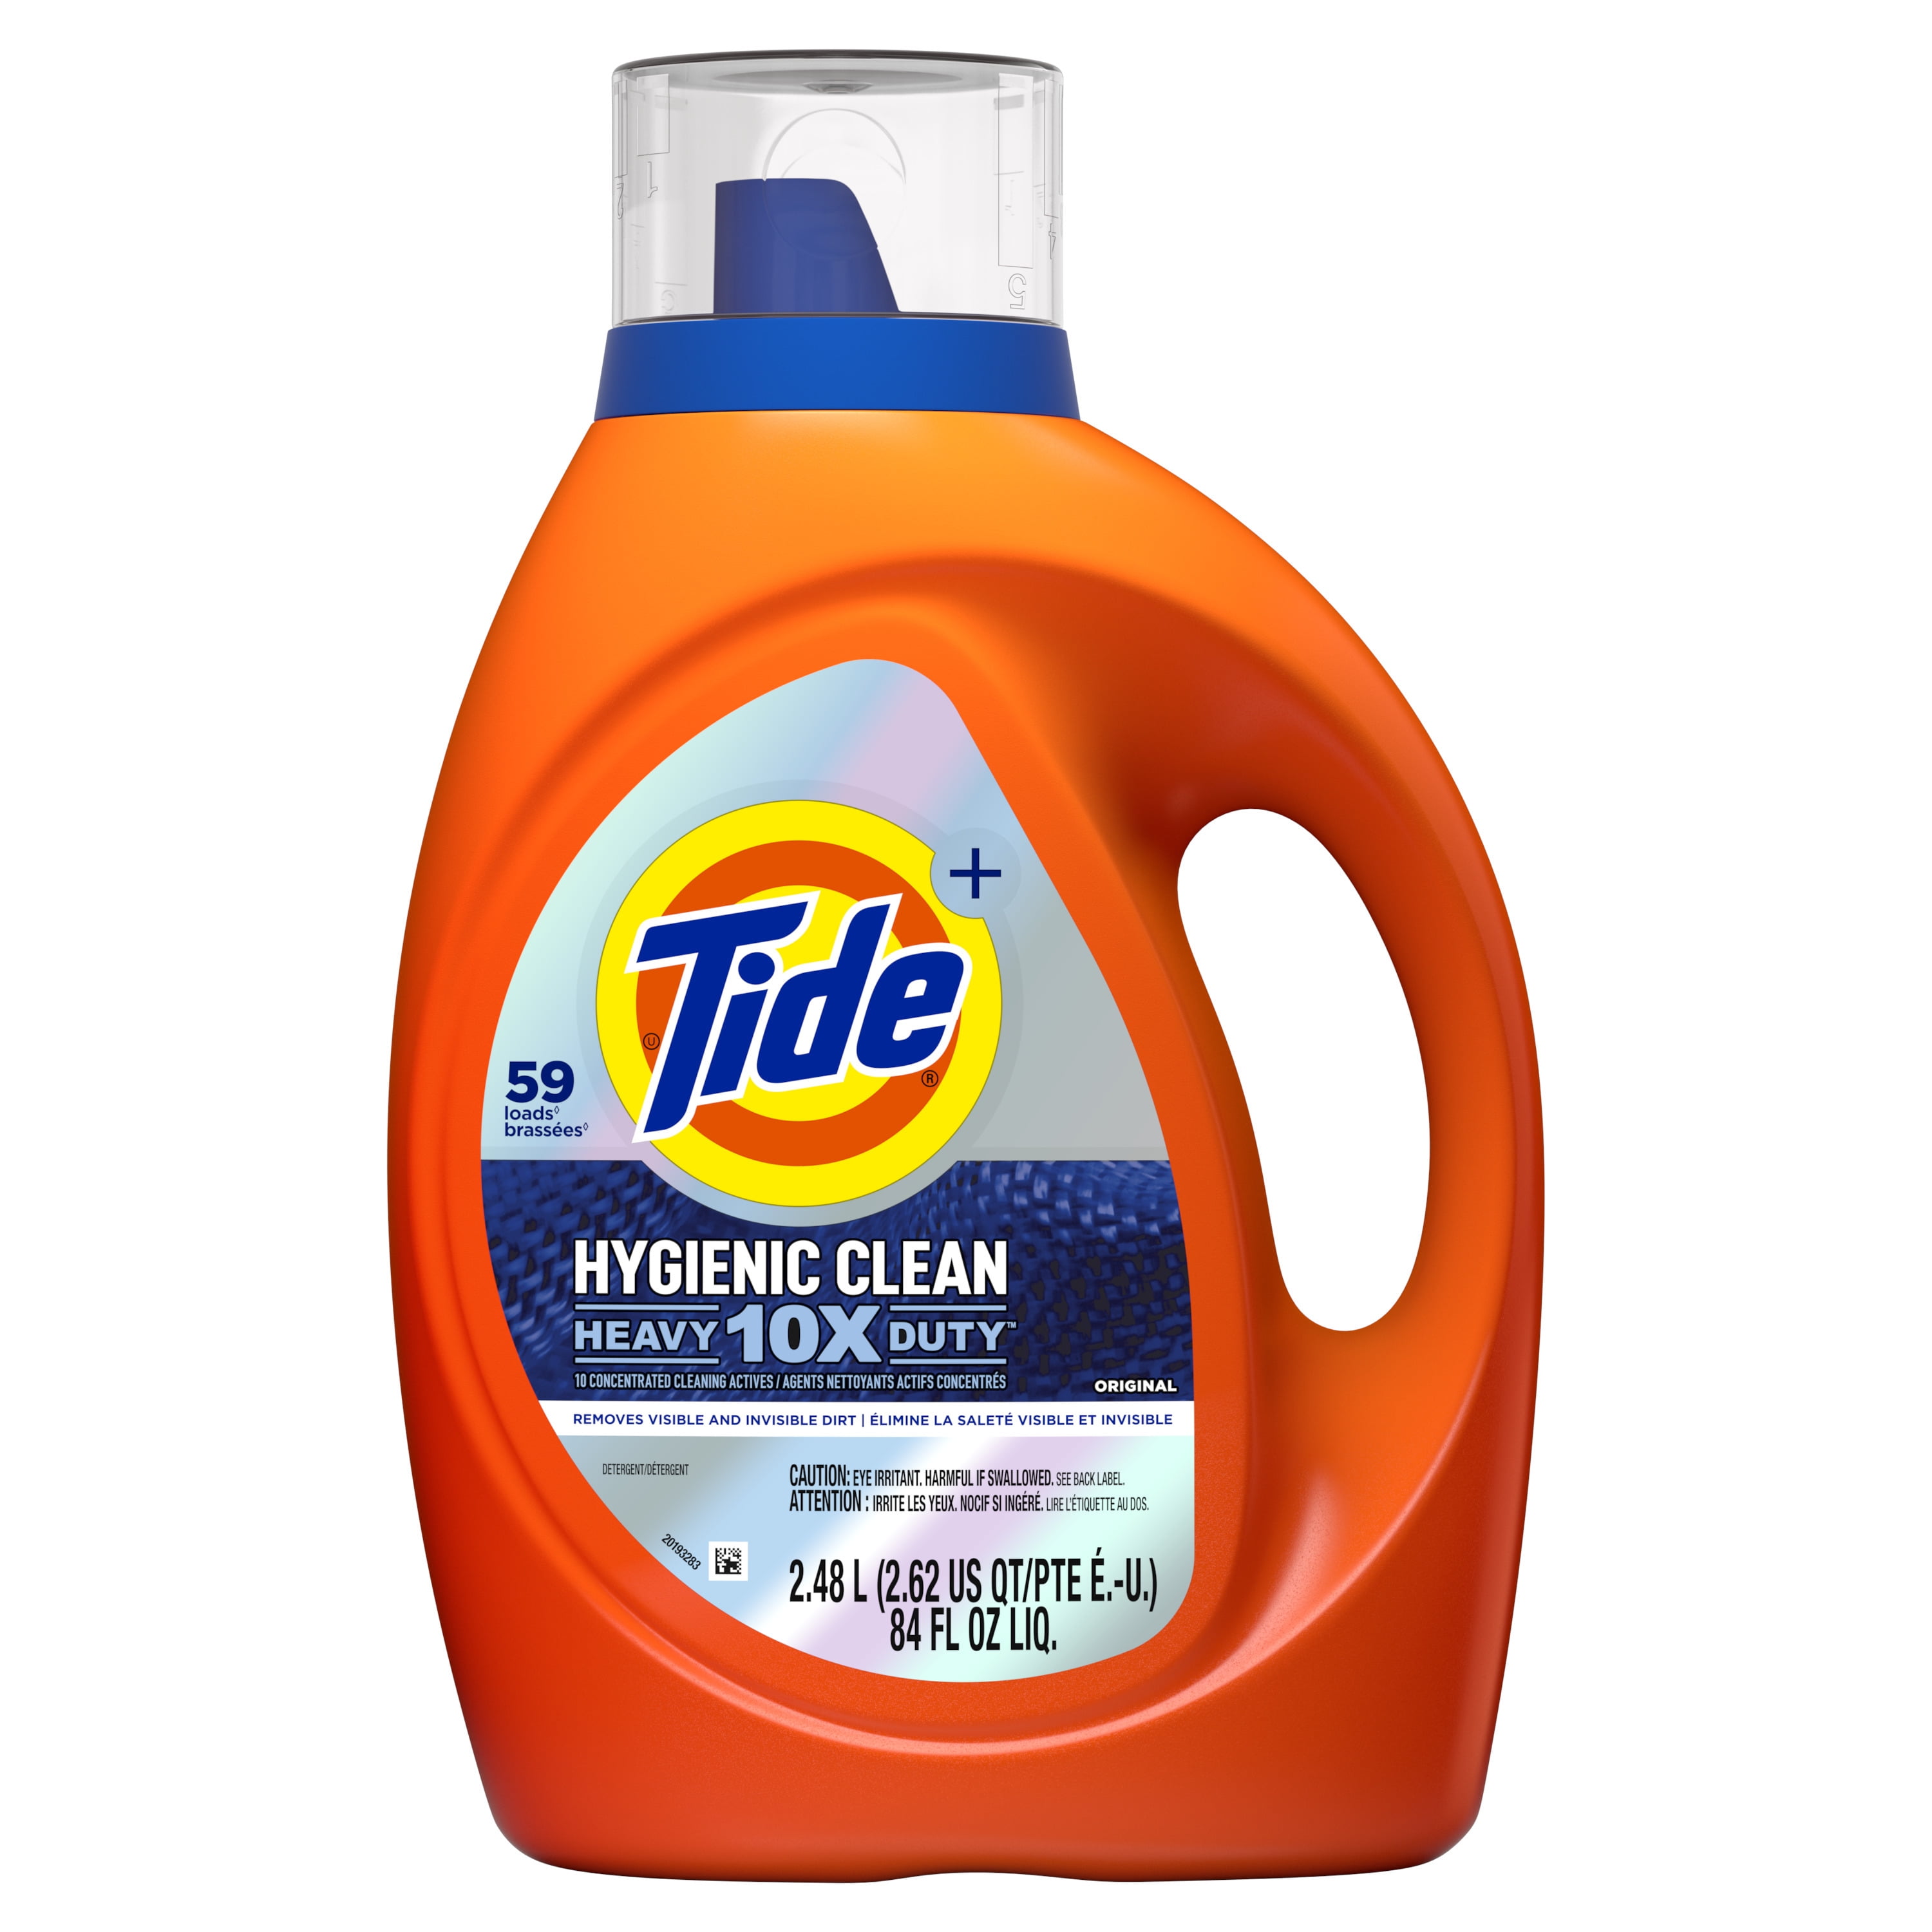 Tide Hygienic Clean Heavy 10x Duty Liquid Laundry Detergent, 64 Loads, 92  fl oz